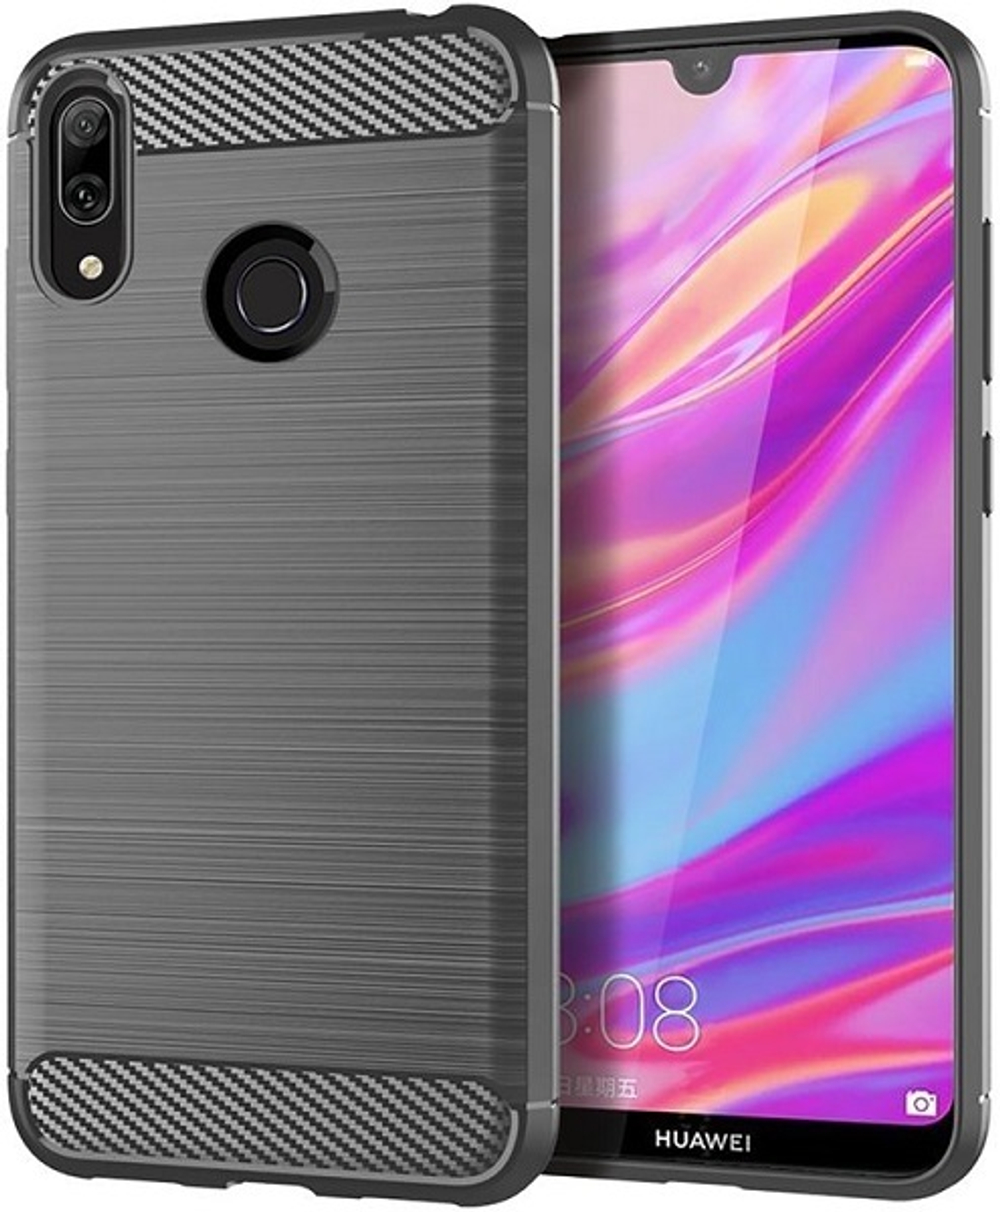 Чехол для Huawei Y7 2019 (Y7 Pro, Y7 Prime) цвет Gray (серый), серия Carbon от Caseport